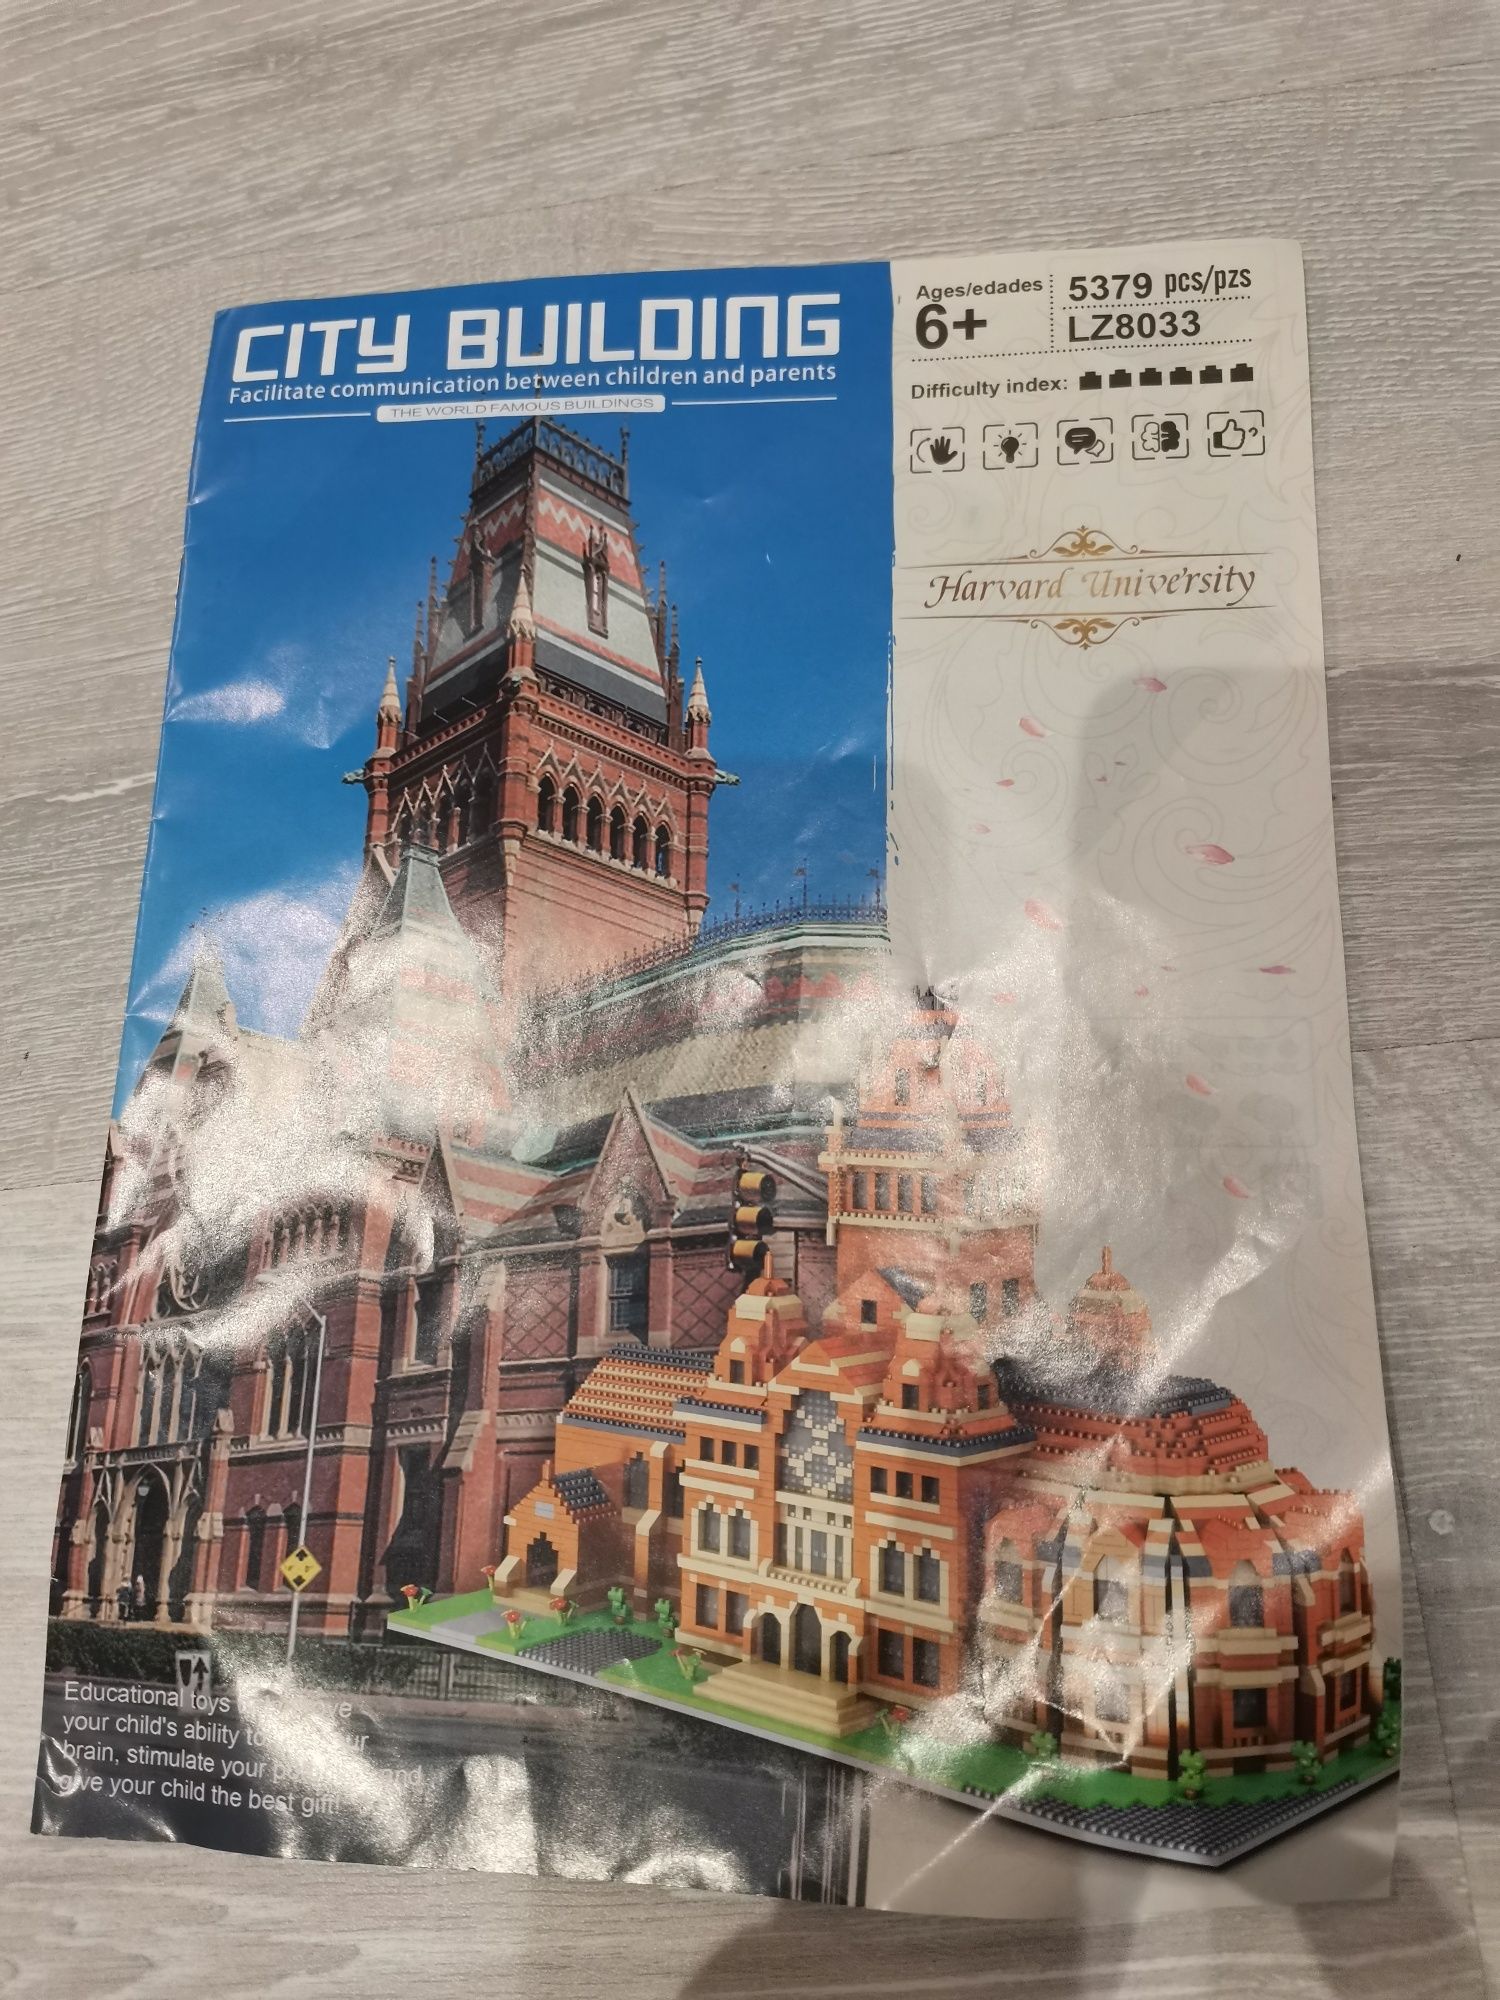 Lego city building